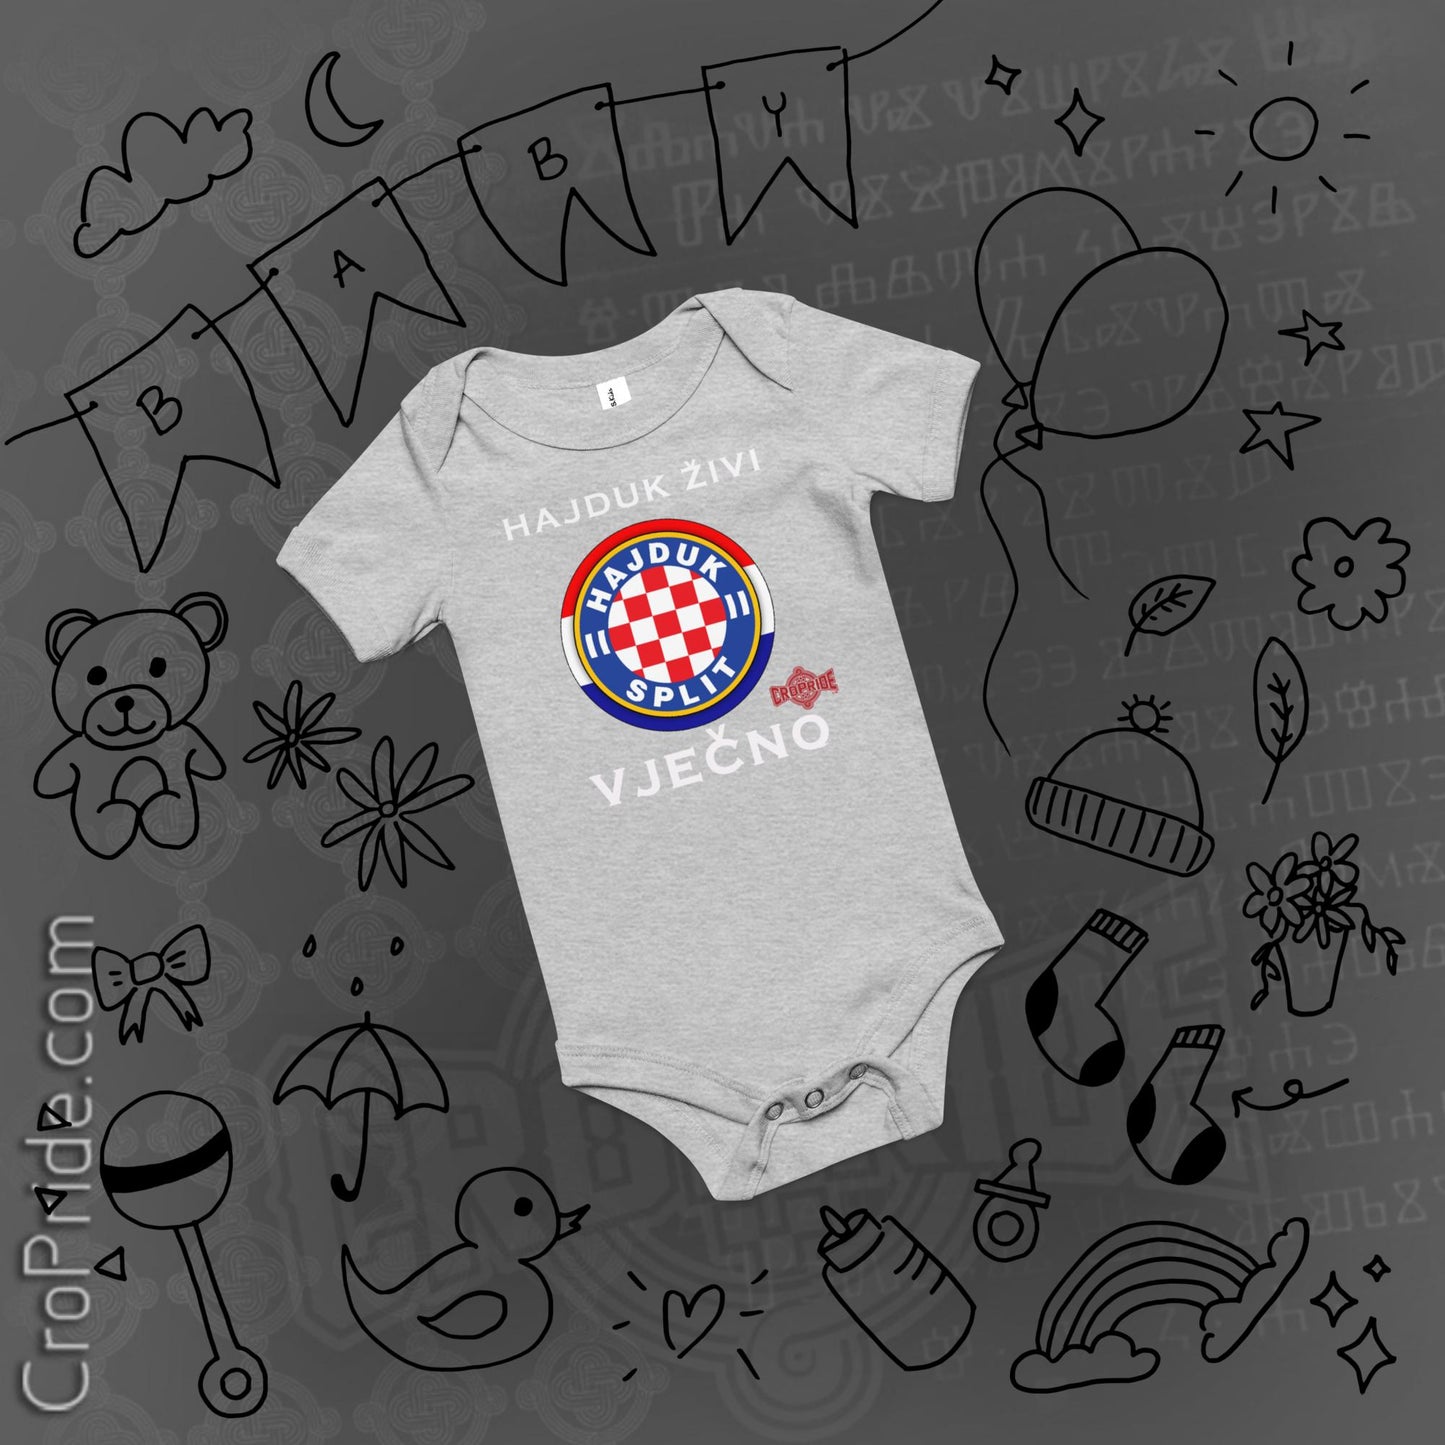 Hajduk Živi Vječno Baby Onesie - 100% Cotton, Envelope Neckline, Snap Leg Closure